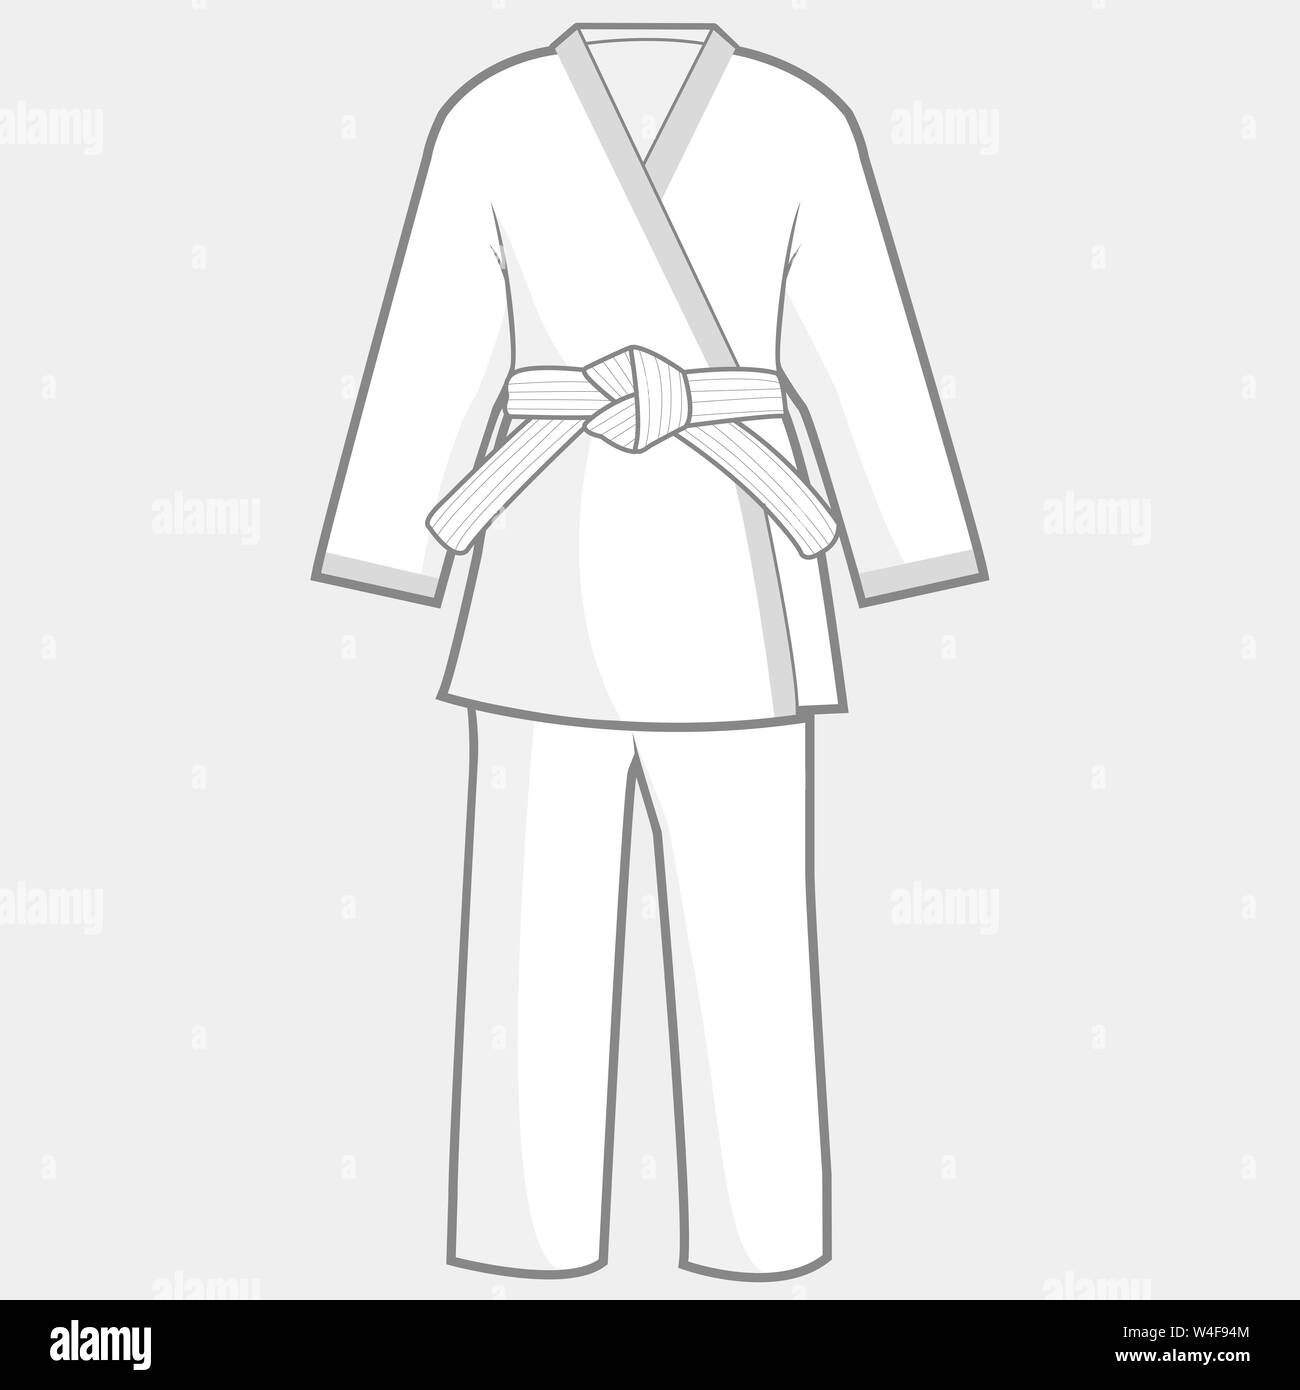 Agresivo ambiente Combatiente Illustration of martial arts uniform. Karate, Taekwondo, judo, jujitsu,  kickboxing, or kung fu suit Stock Photo - Alamy